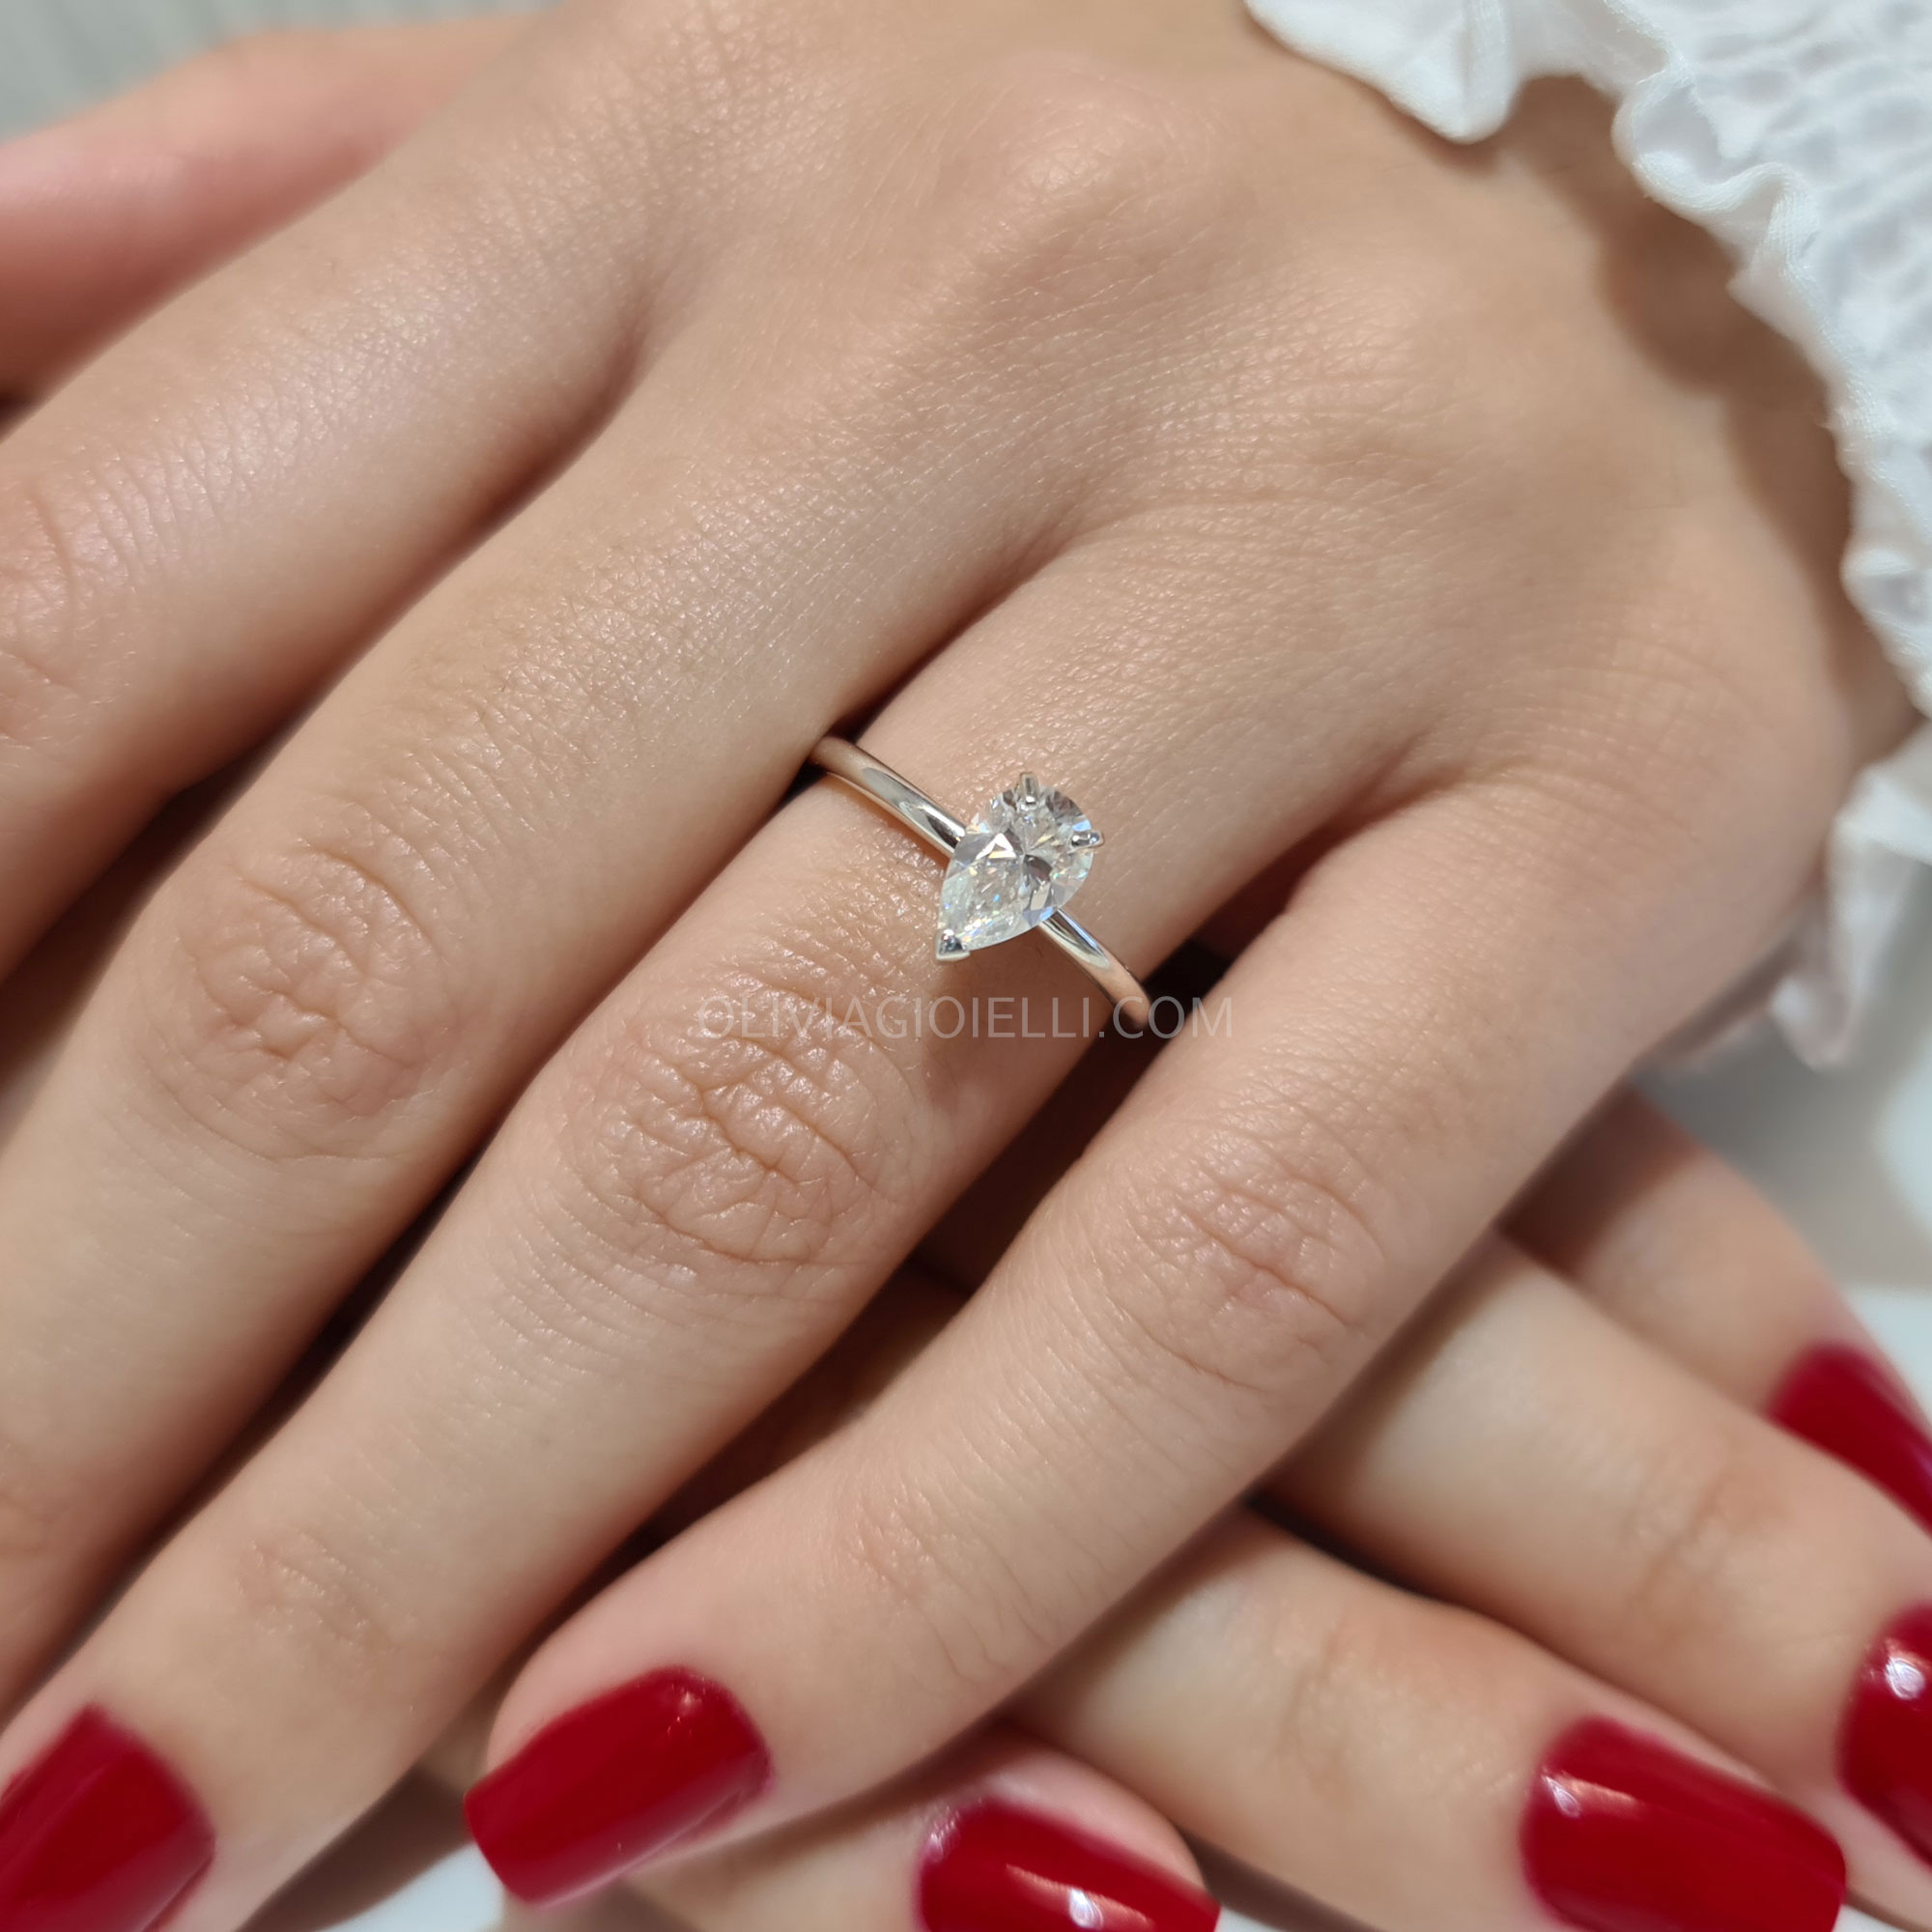 1 carat Pear Shaped Diamond Engagement Ring